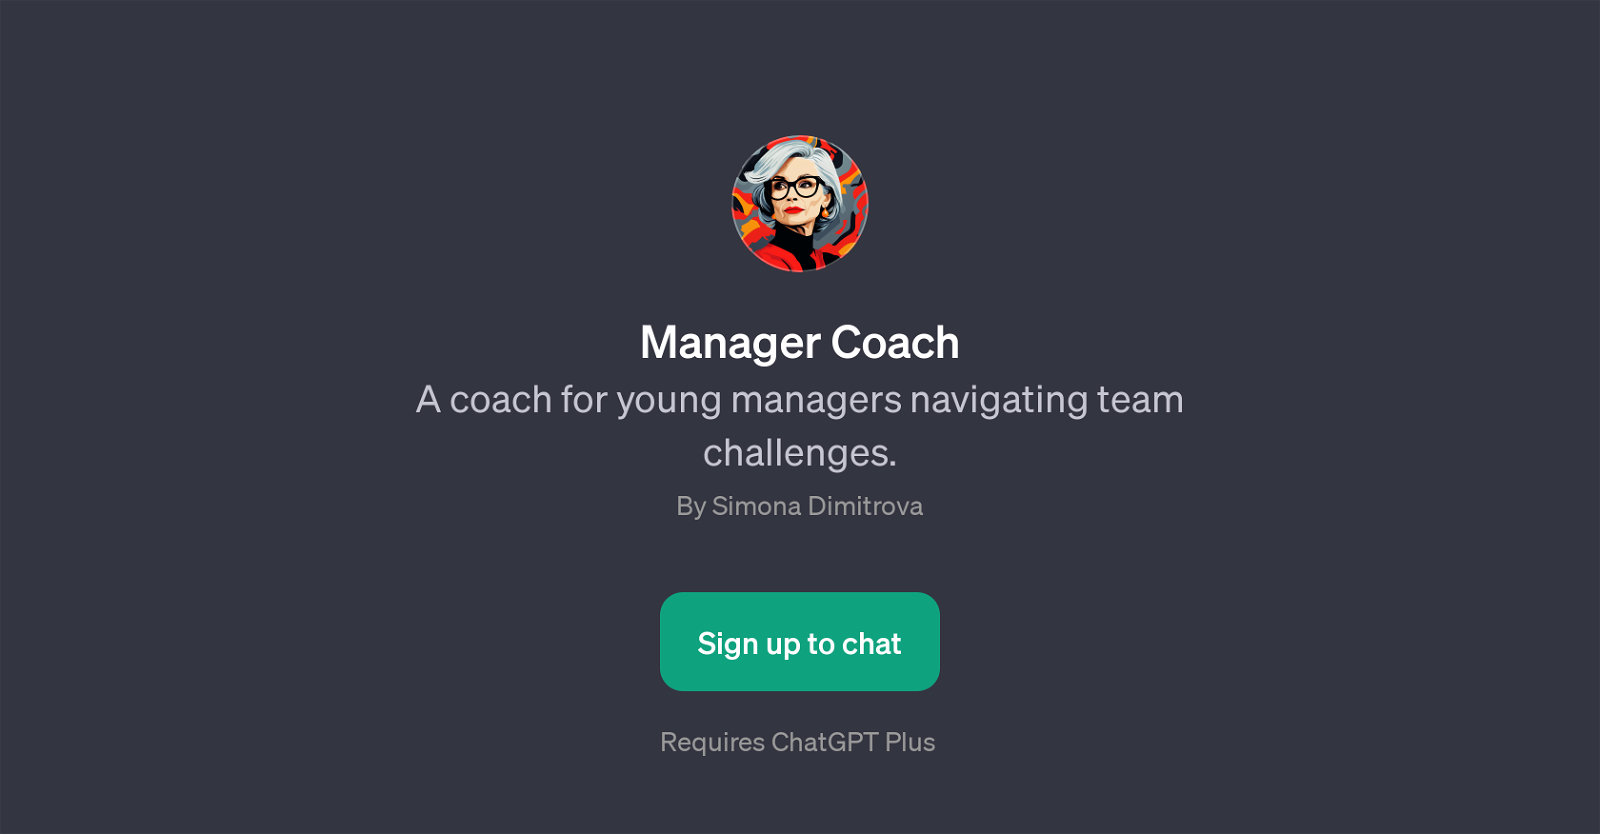 Manager Coach website